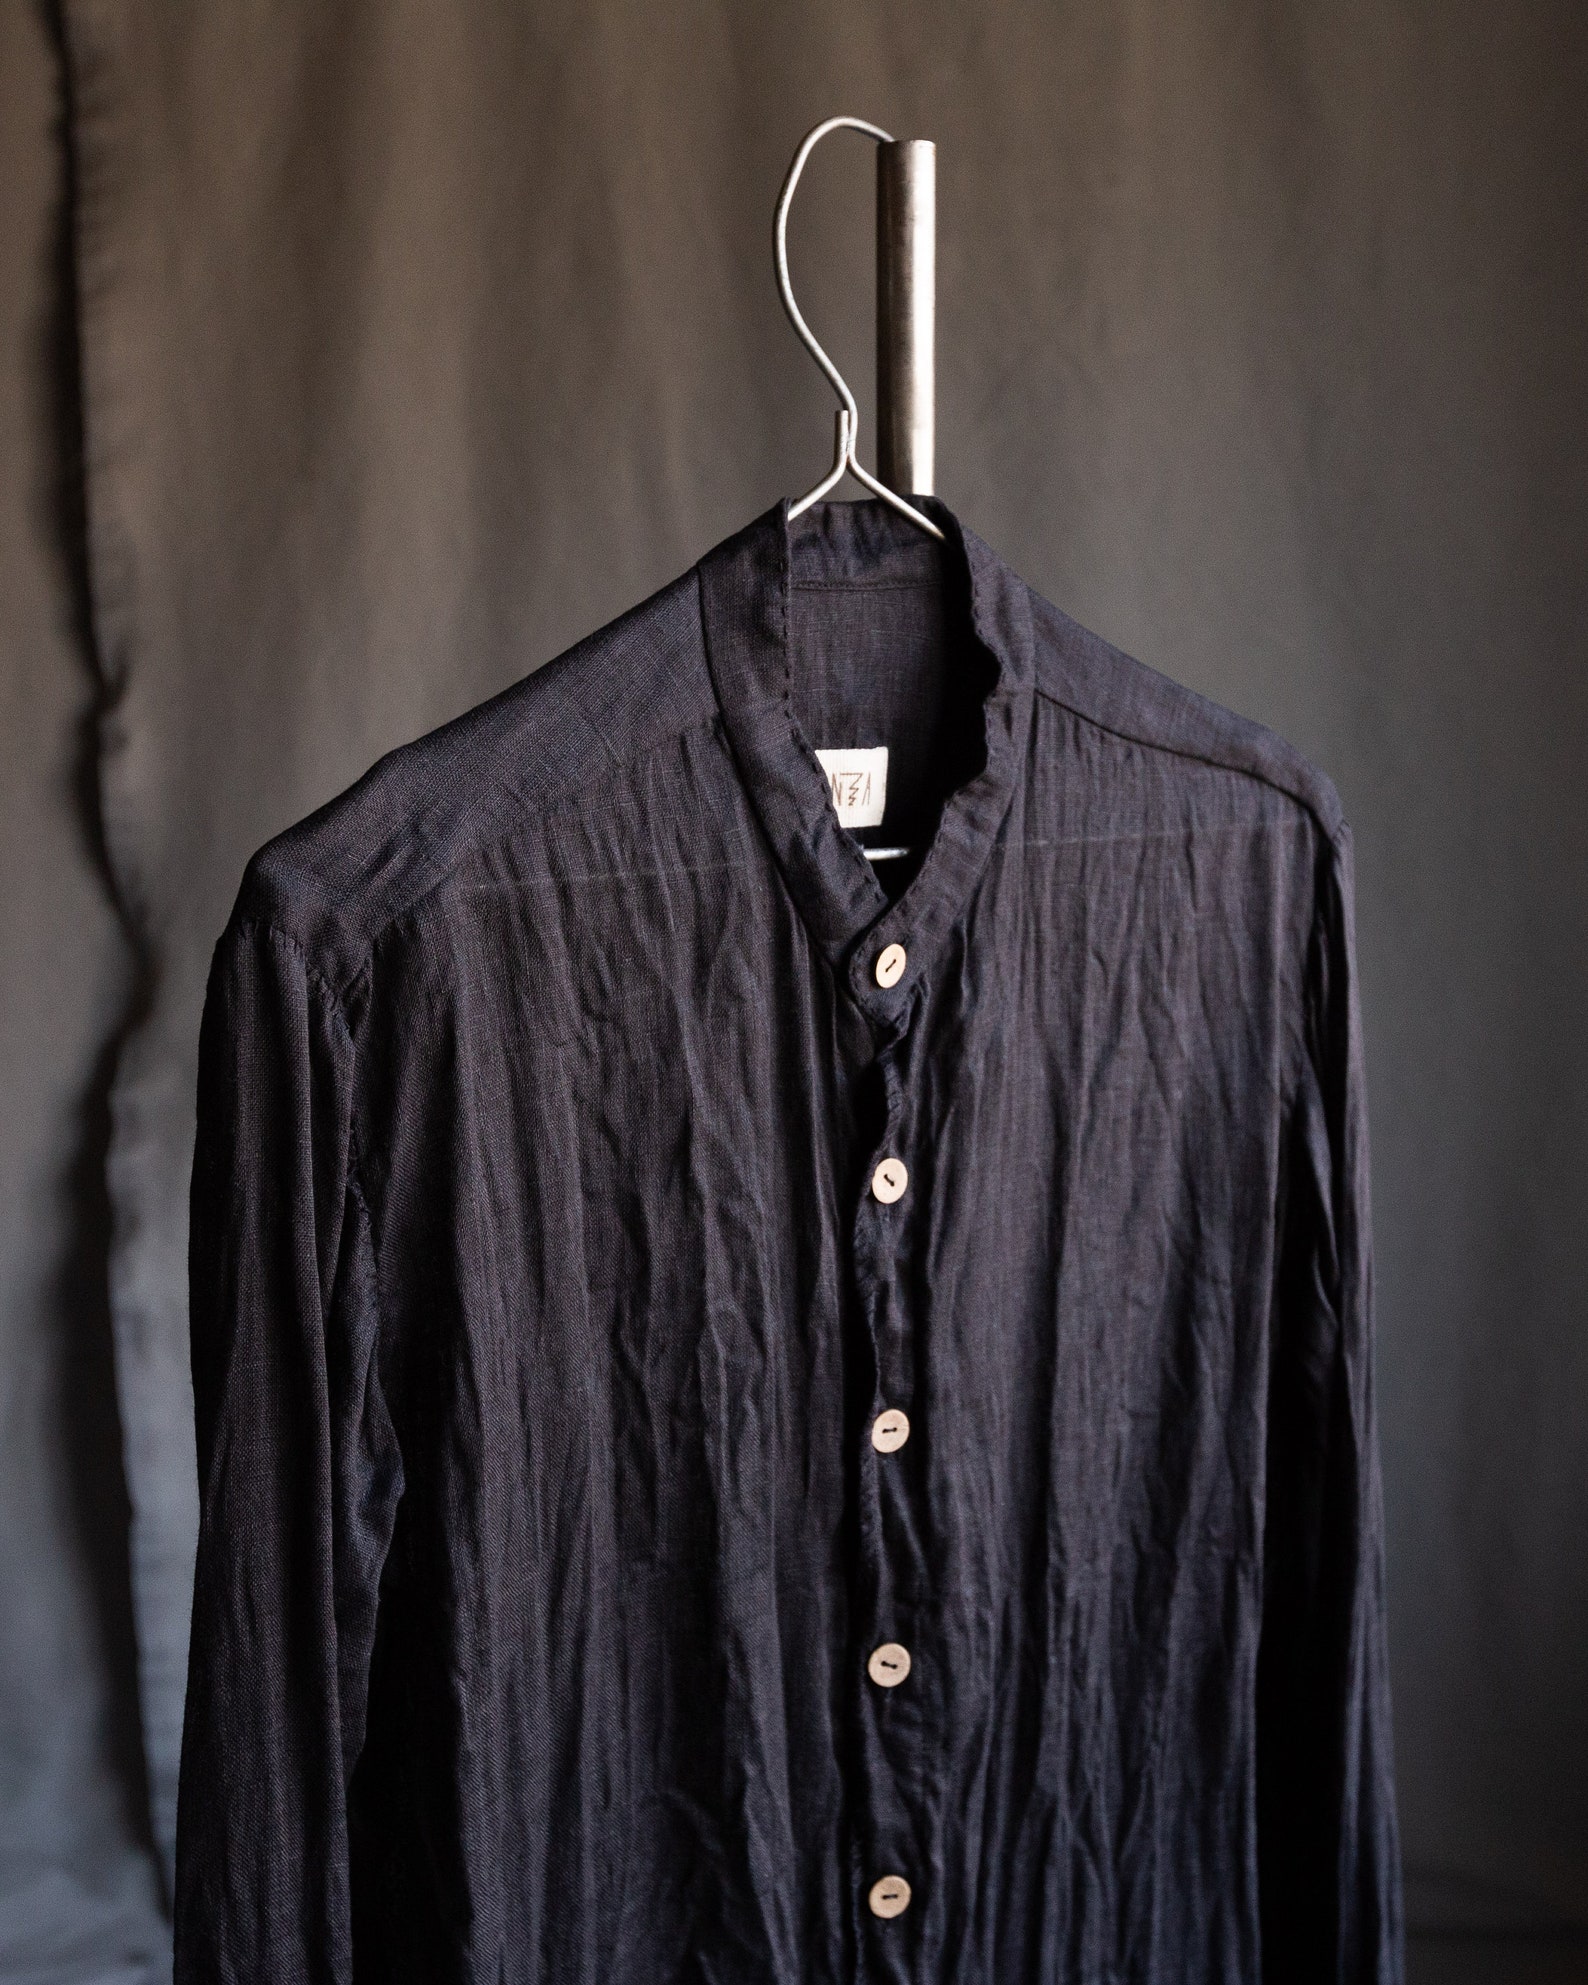 Men's black linen shirt EARTH. Men's summer shirt | Etsy